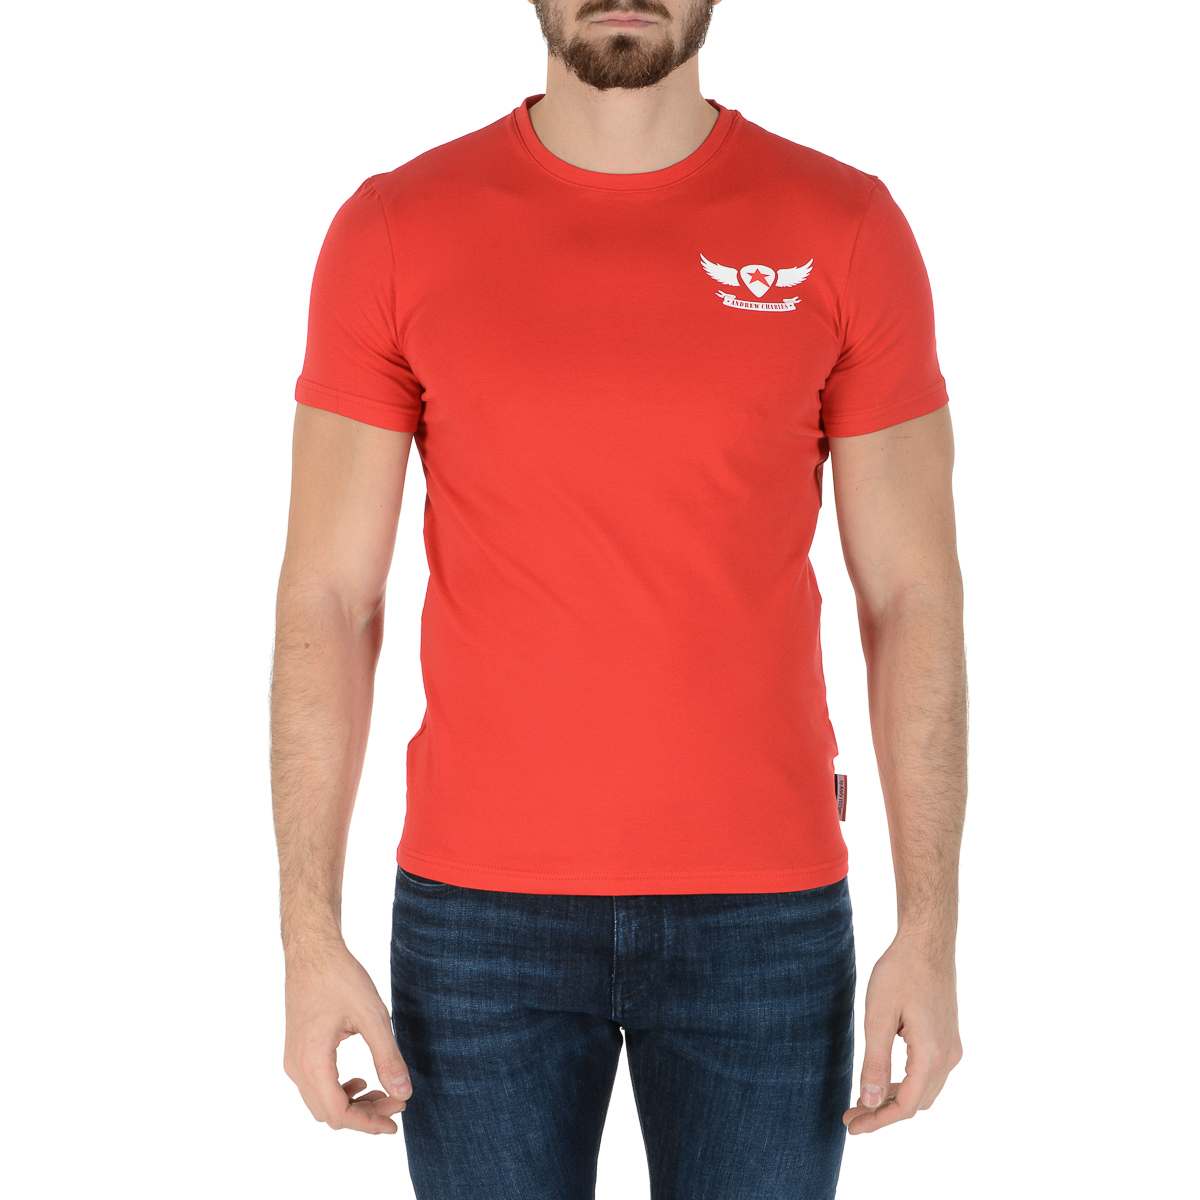 Andrew Charles Mens T-Shirt Short Sleeves Round Neck Red KEITA